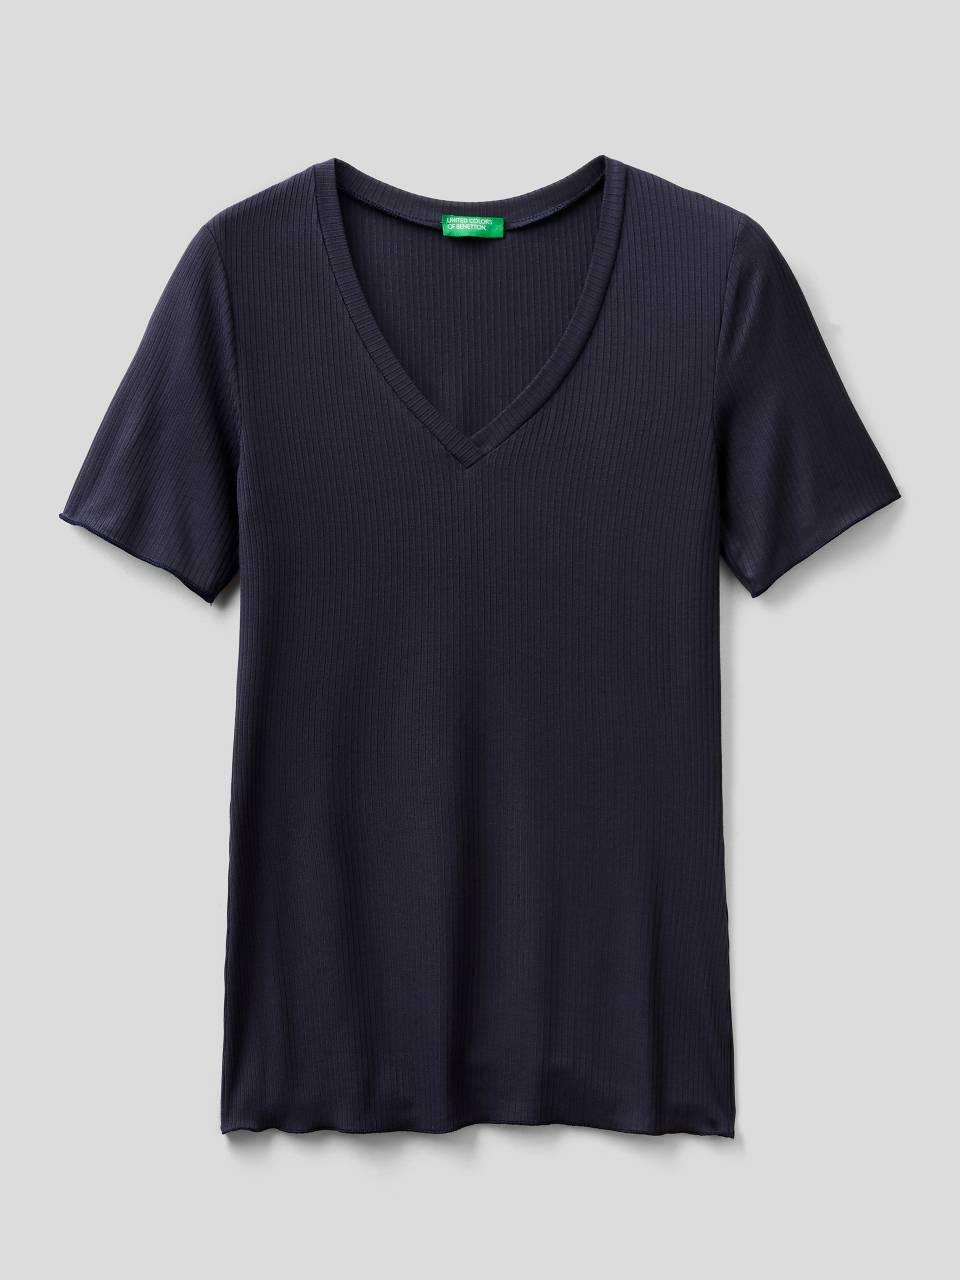 Benetton V-neck ribbed knit t-shirt. 1